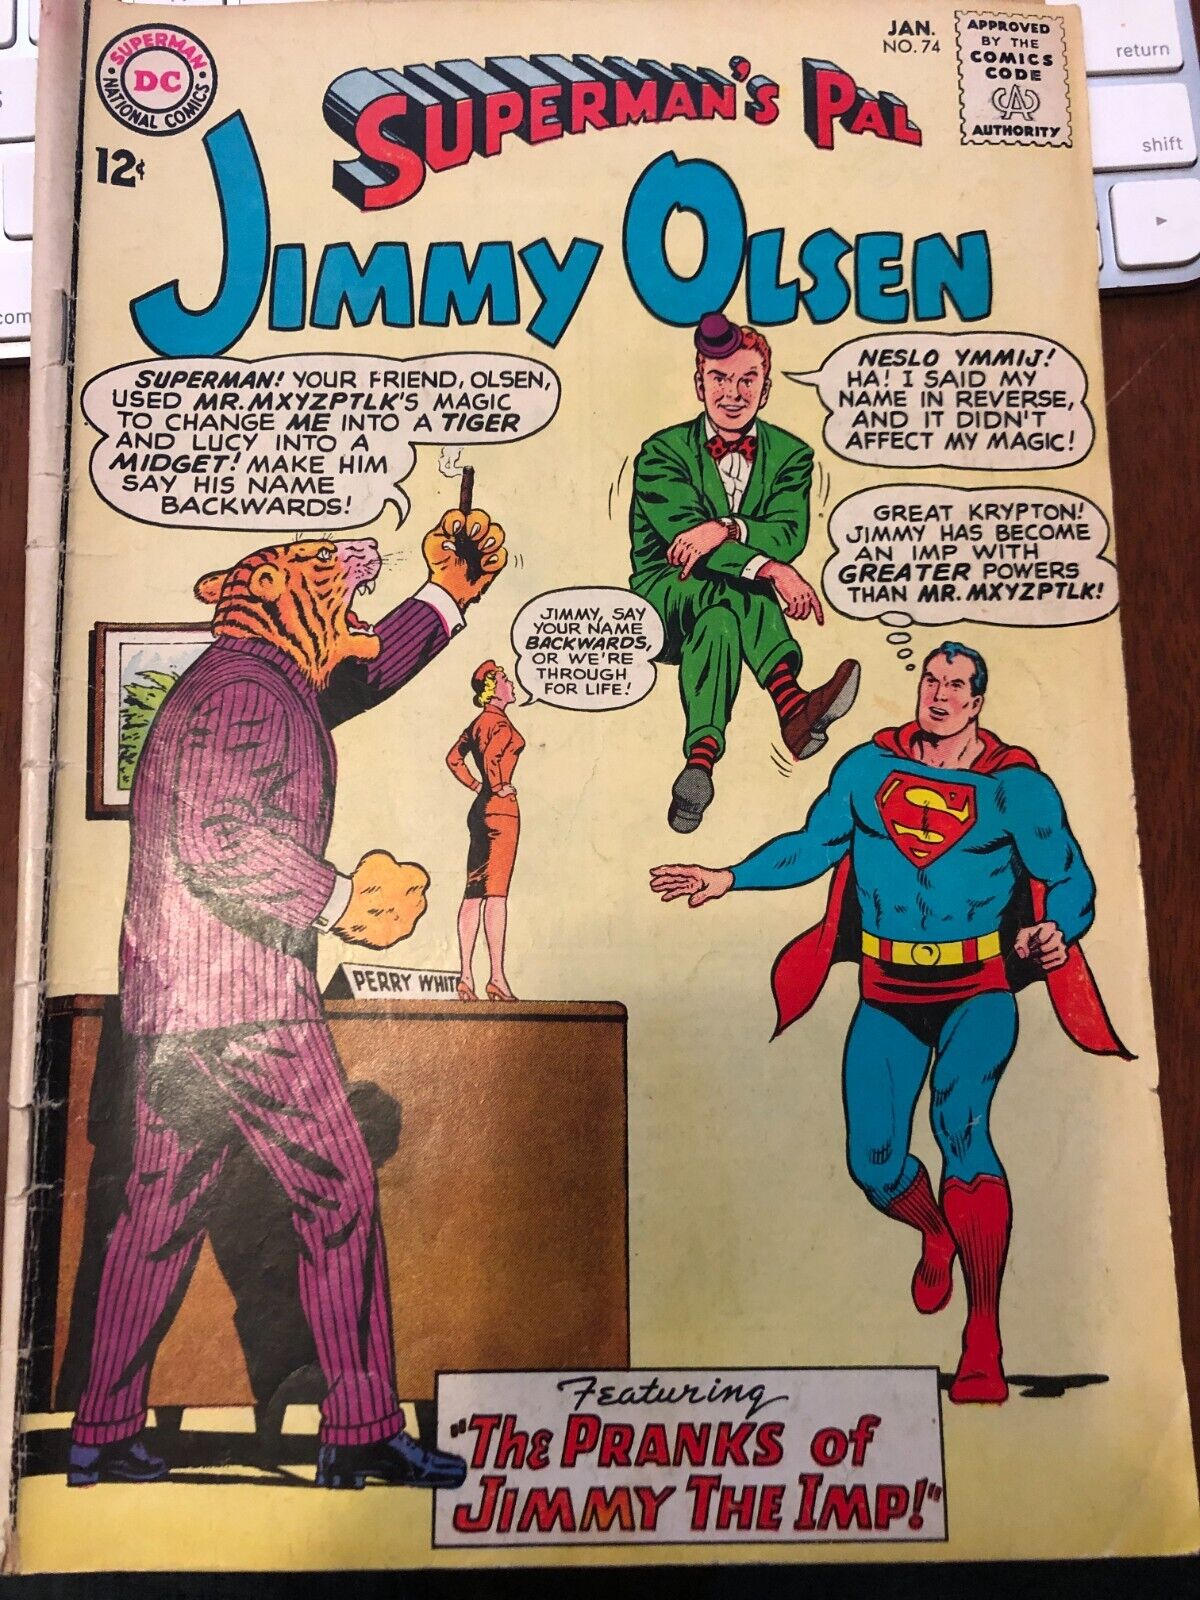 Superman's Pal Jimmy Olsen #74 Silver Age DC Comics January 1964